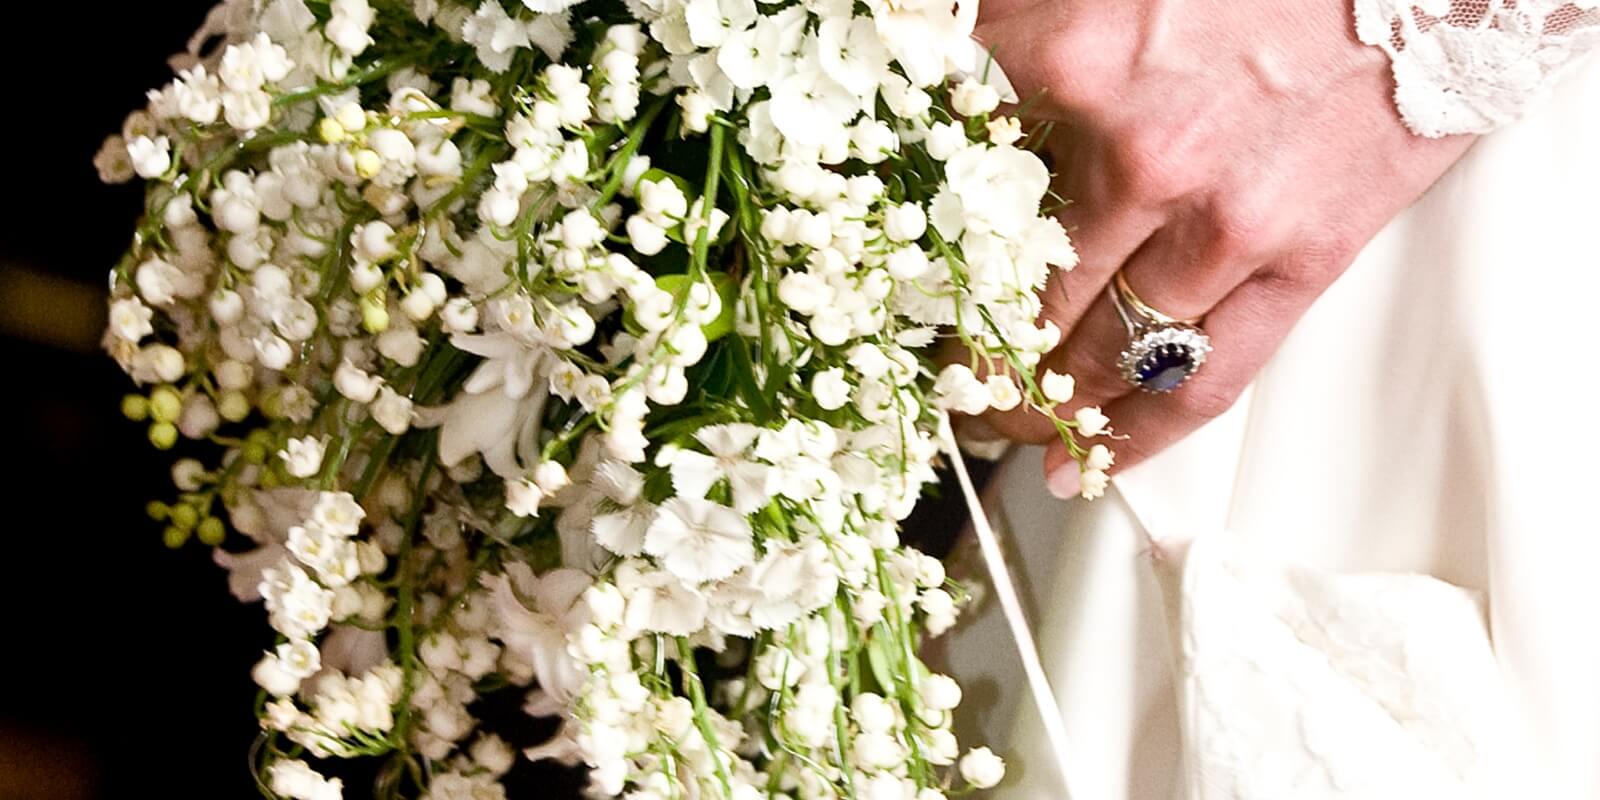 Kate Middleton wedding bouquet featured a stunning arrangement of flowers